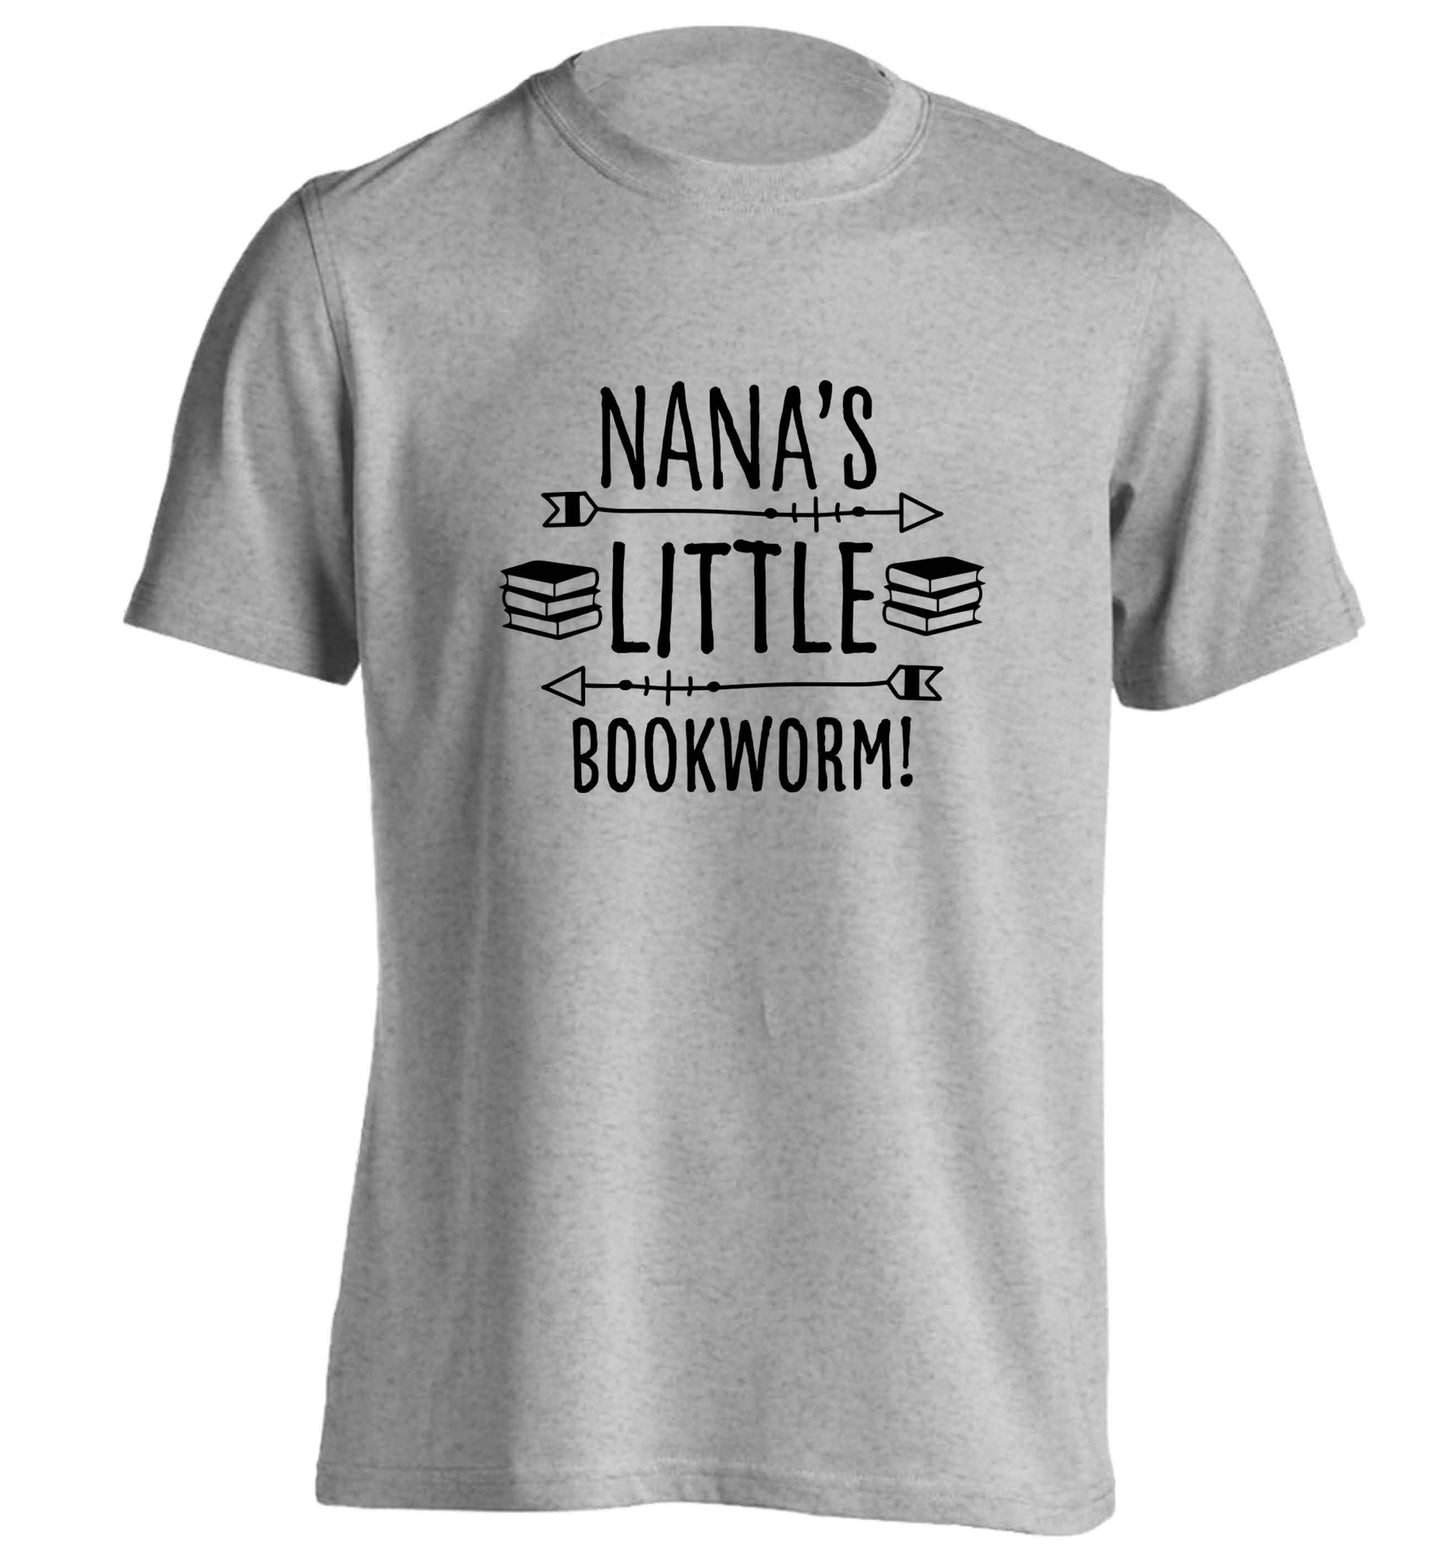 Nana's little bookworm adults unisex grey Tshirt 2XL